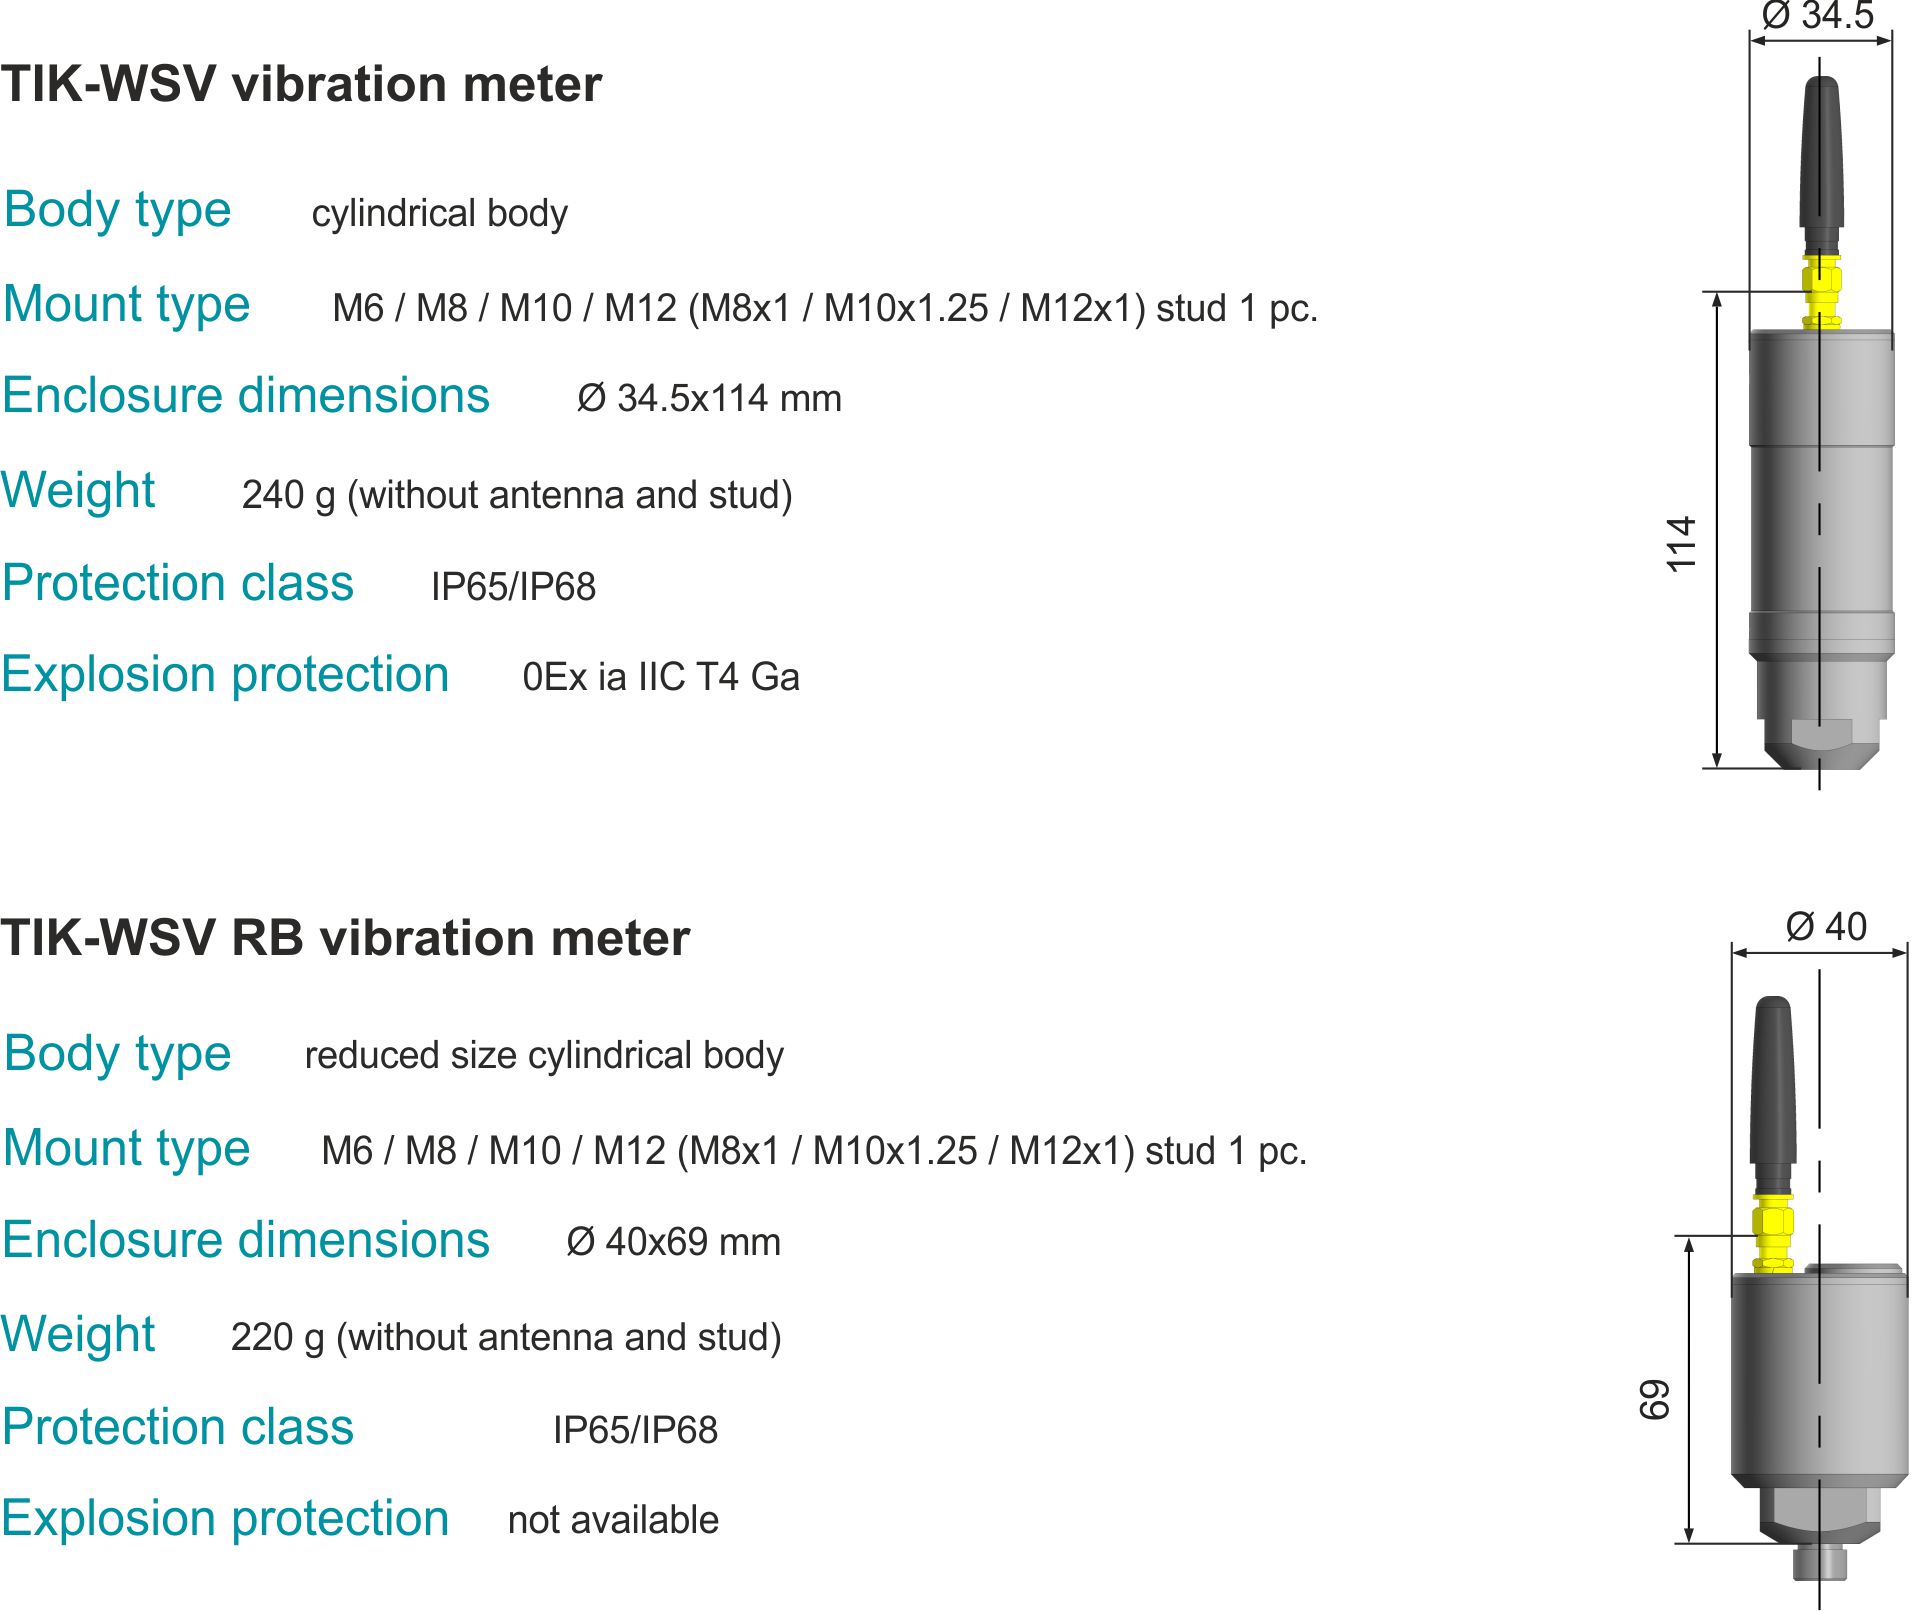 Constructive execution of TIK-WSV vibration meter